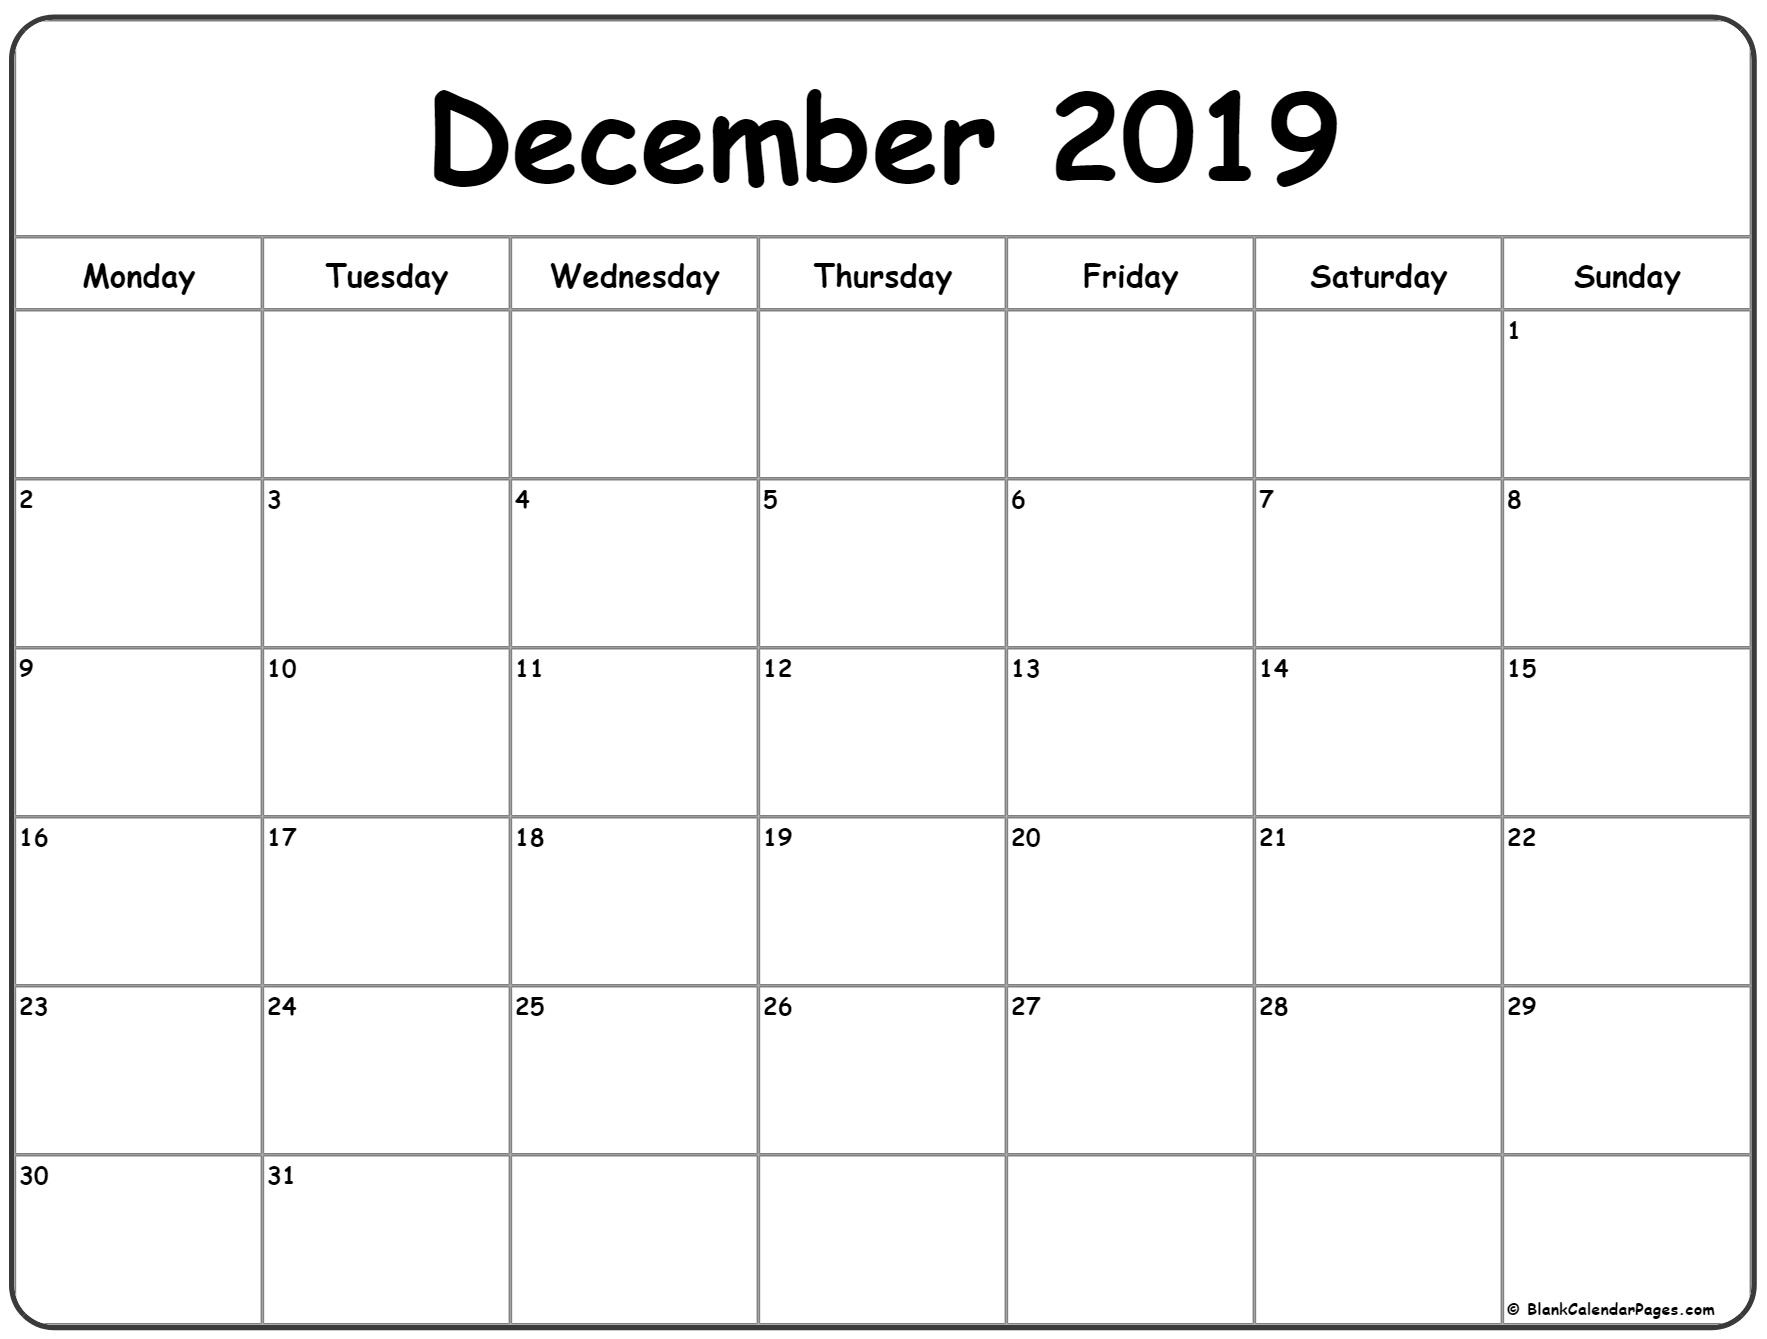 December 2019 Monday Calendar | Monday To Sunday Exceptional Blank Calendar Starting On Monday